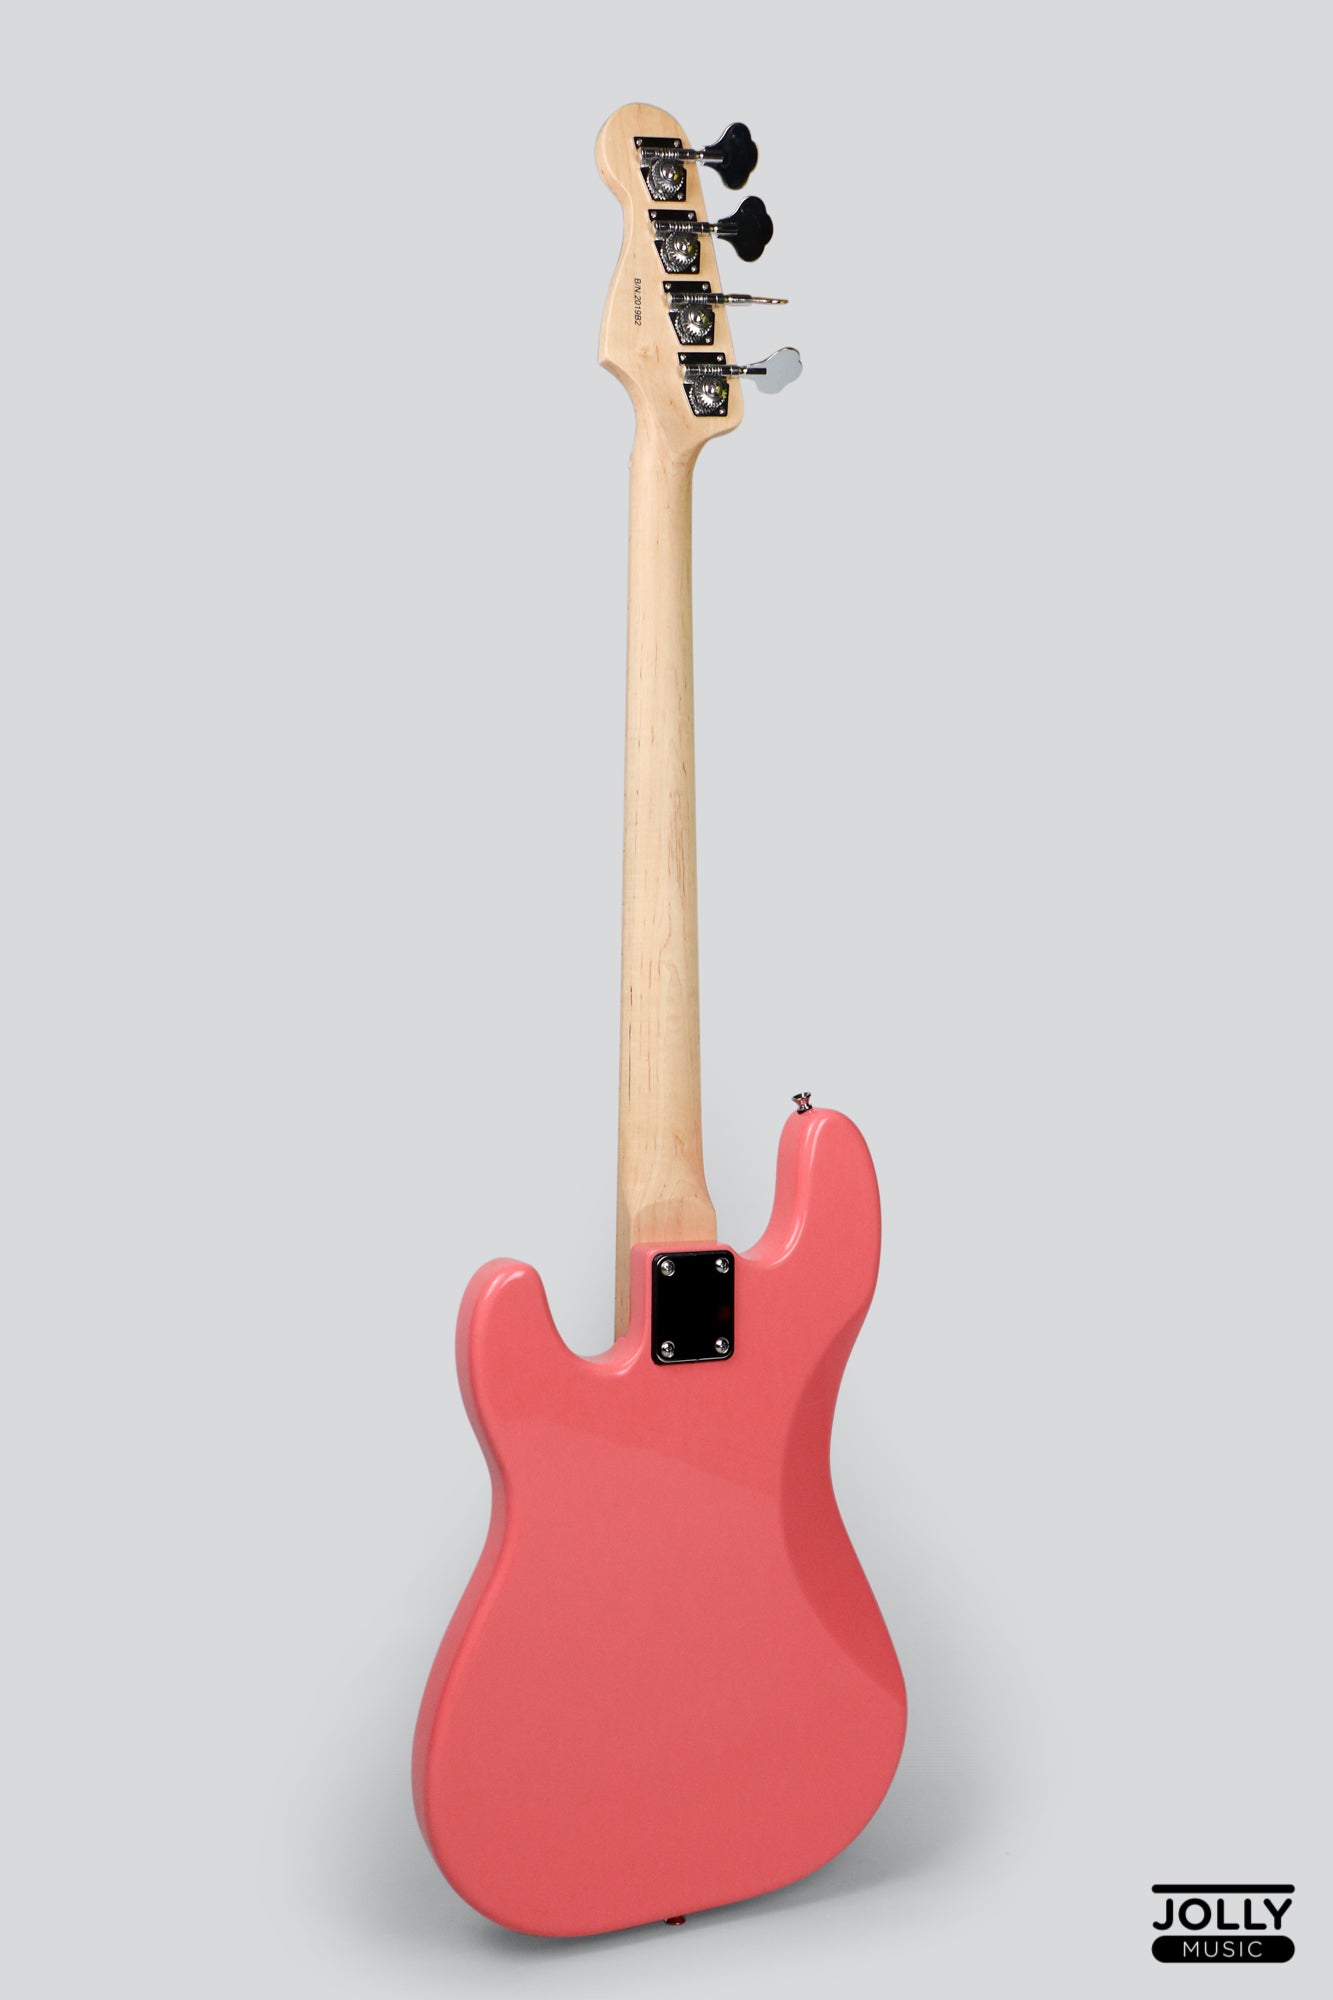 JCraft PB-1 4-String Electric Bass Guitar with Gigbag - Salmon